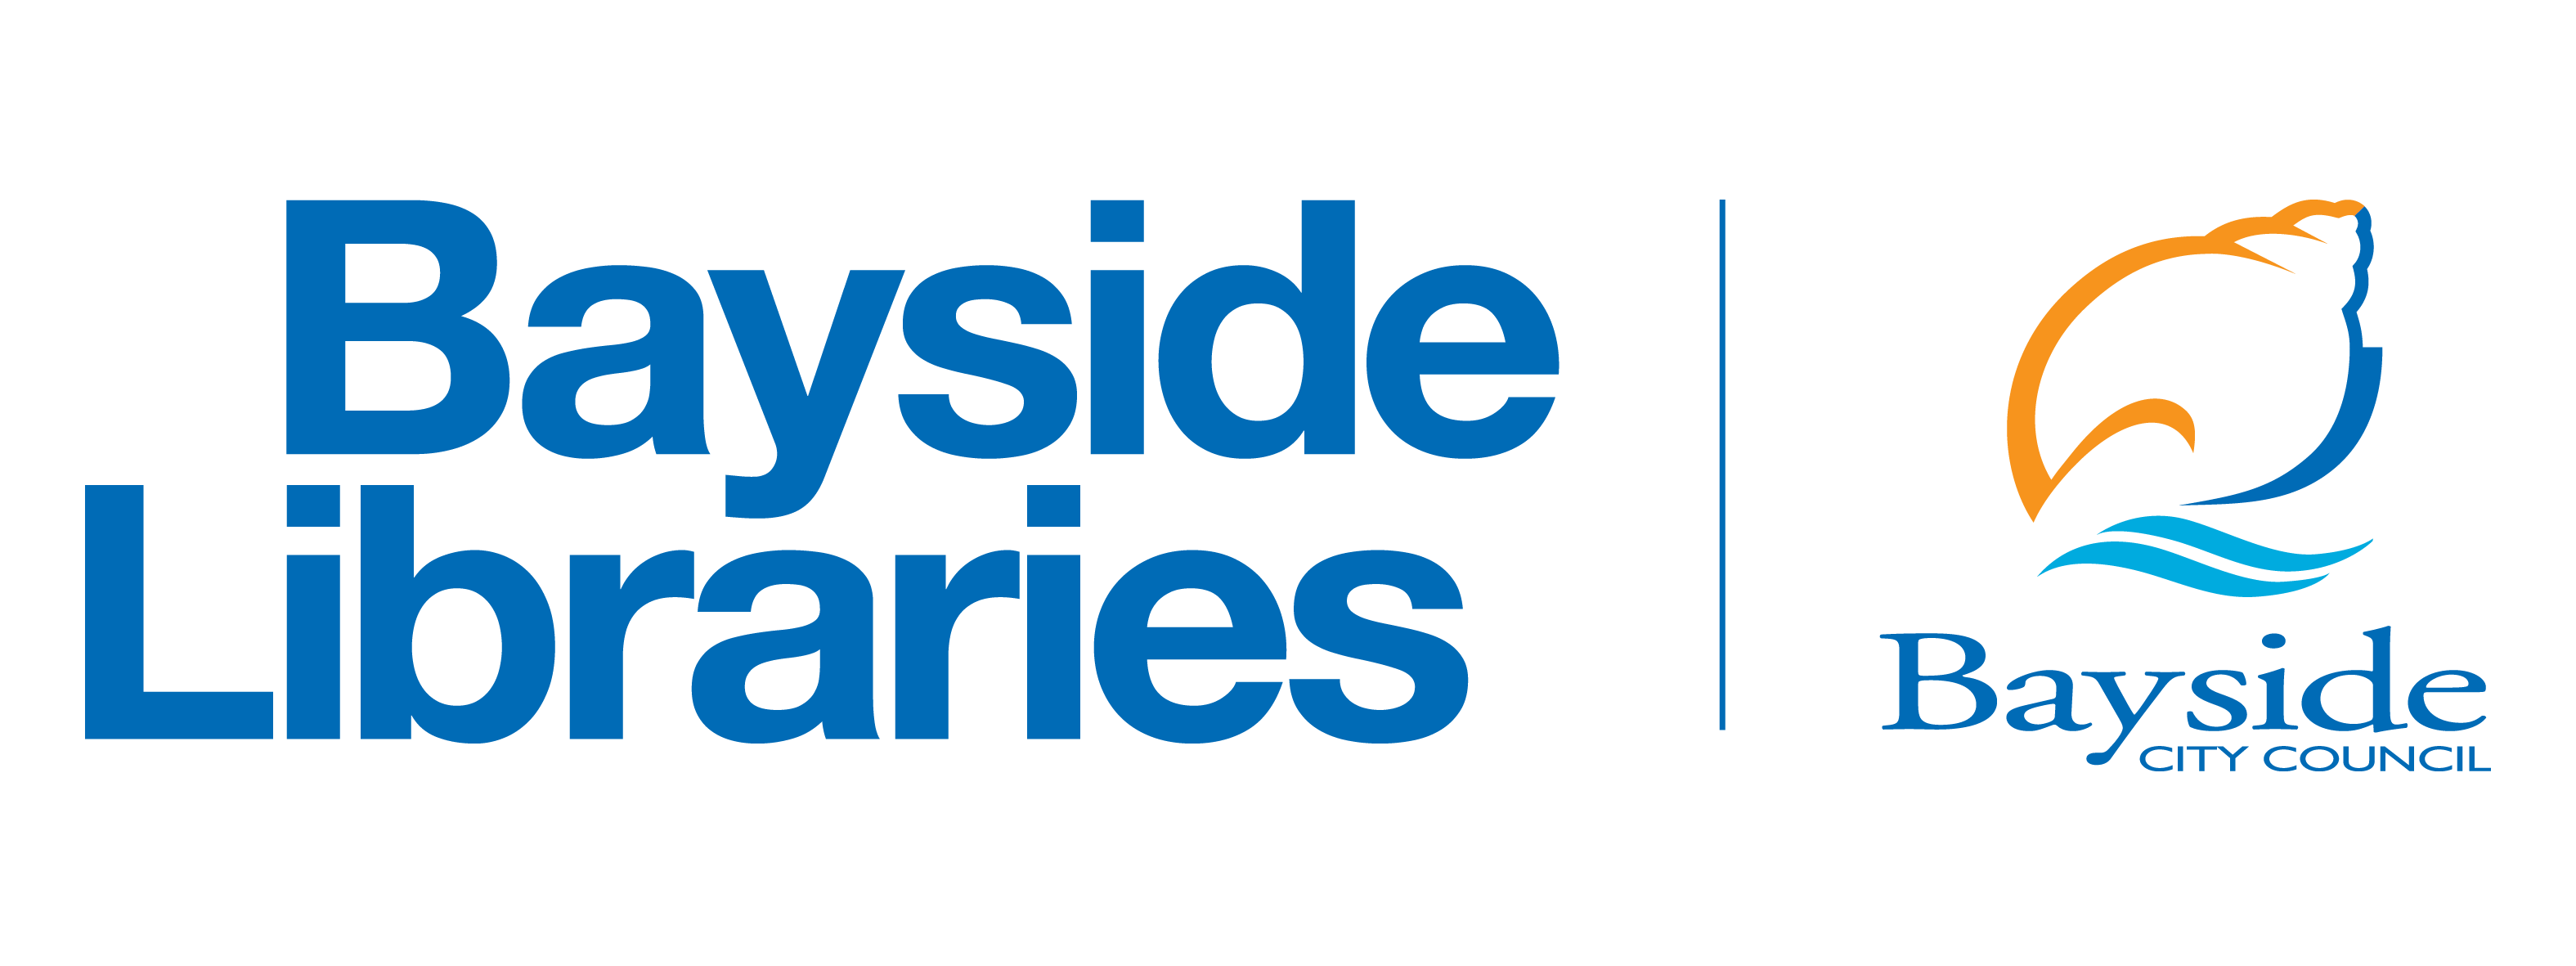 Bayside Library Service logo